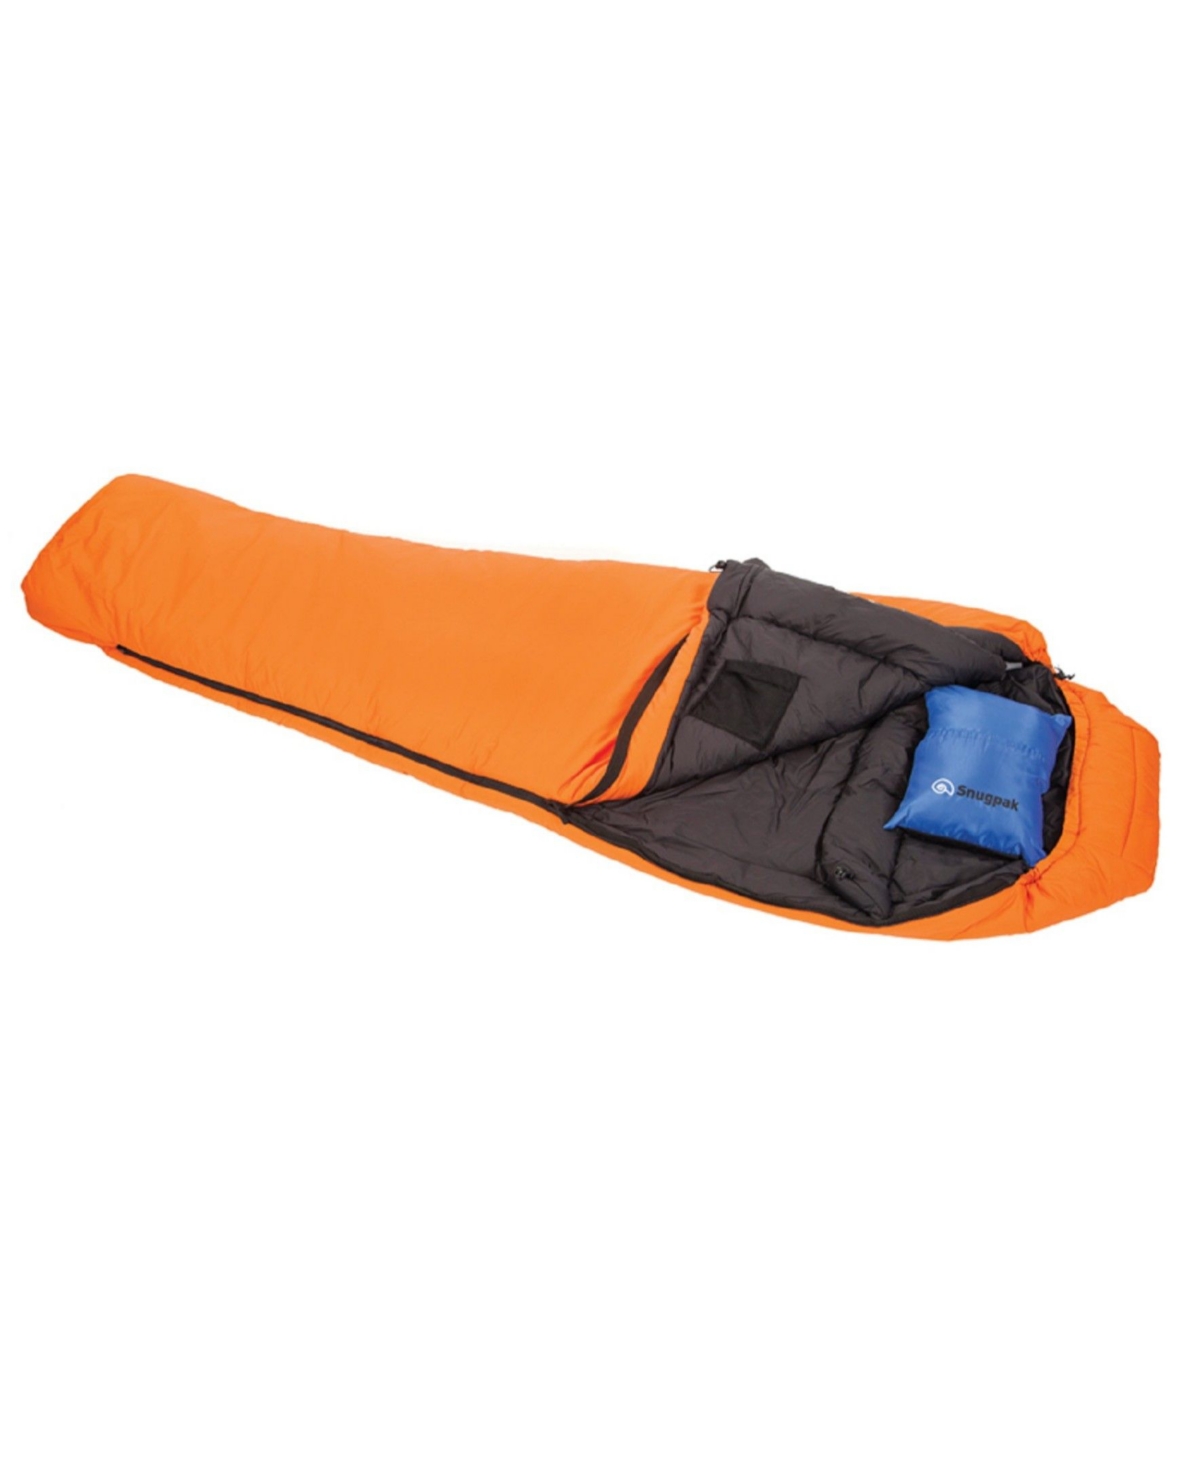 Sportsman's Supply Snugpak Softie 15 Intrepid Sleeping Bag Right Hand Zip In Orange